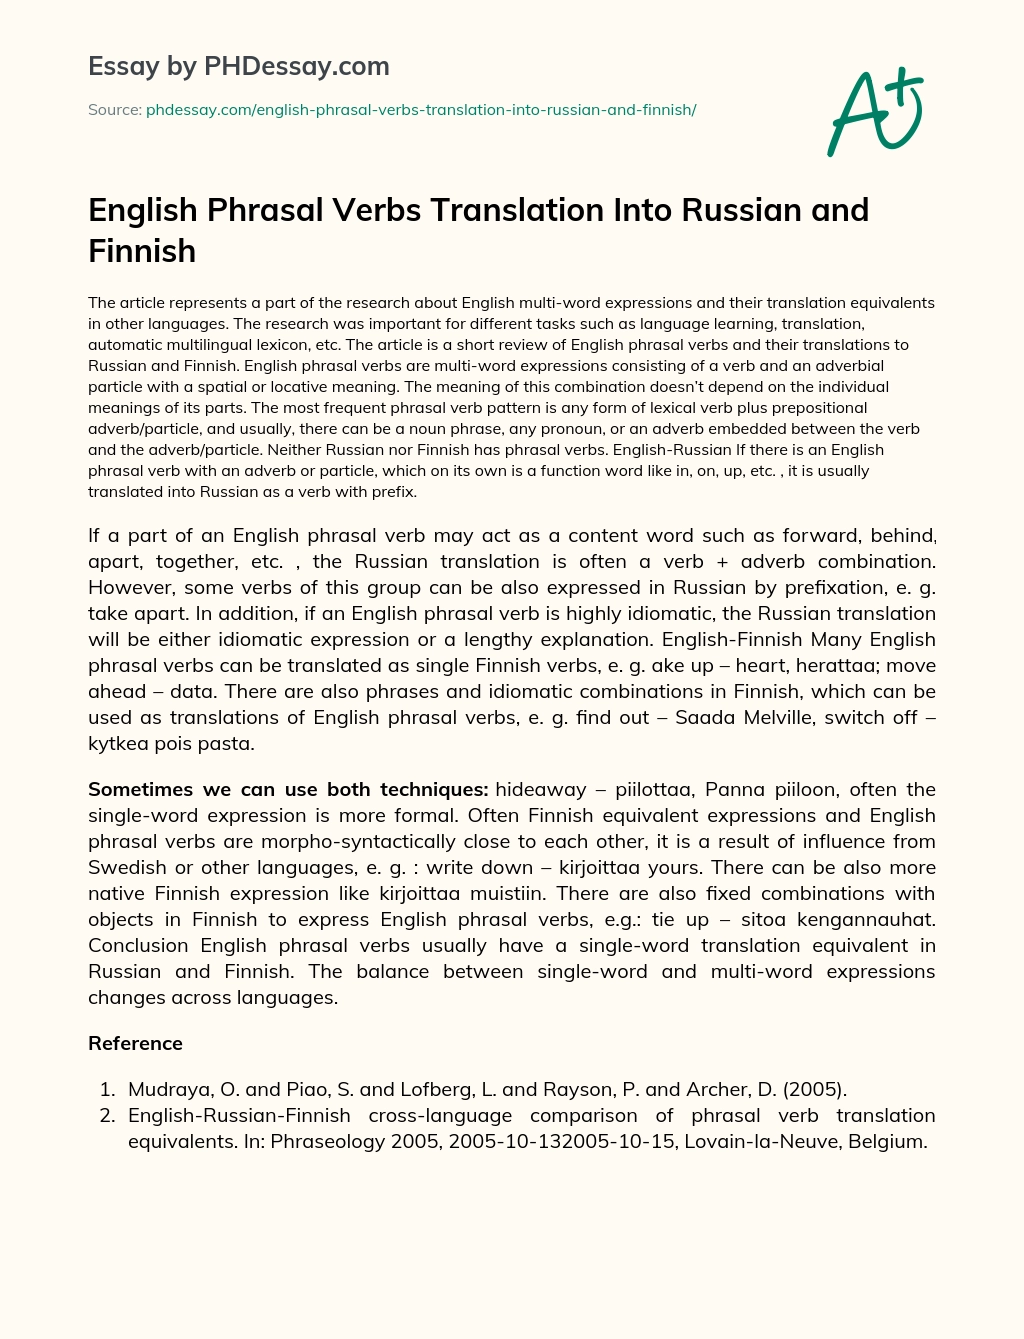 English Phrasal Verbs Translation Into Russian and Finnish essay